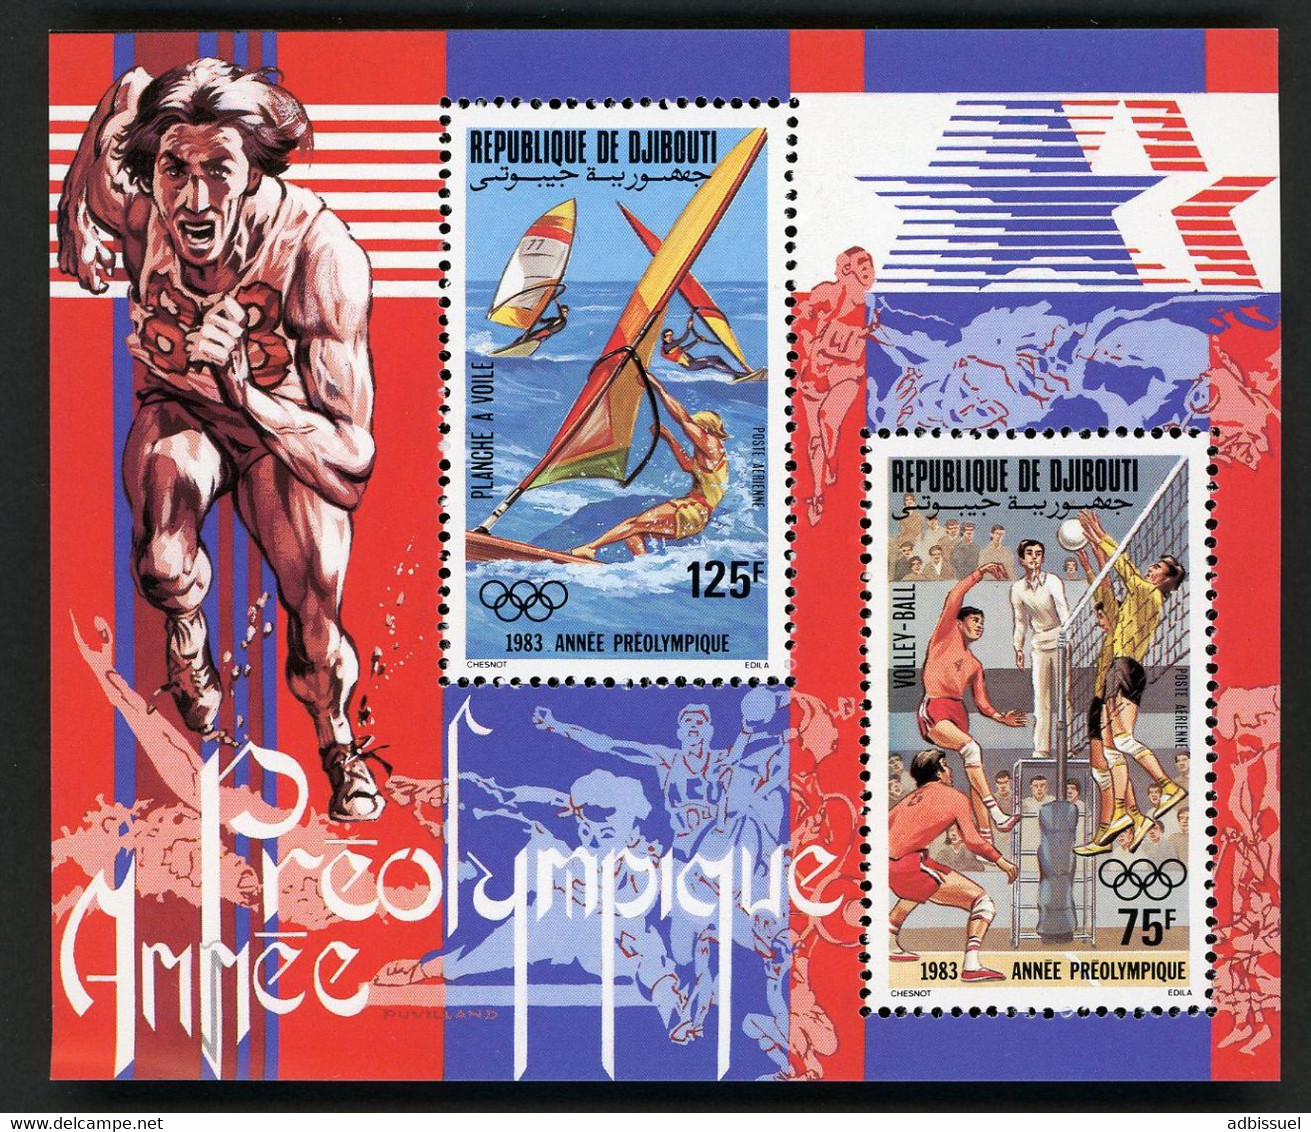 DJIBOUTI Bloc Spécial COTE 22 € Poste Aérienne N° 181 + 182 MNH ** Préolympique Pre-Olympic Volley Windsurf. TB/VG - Djibouti (1977-...)